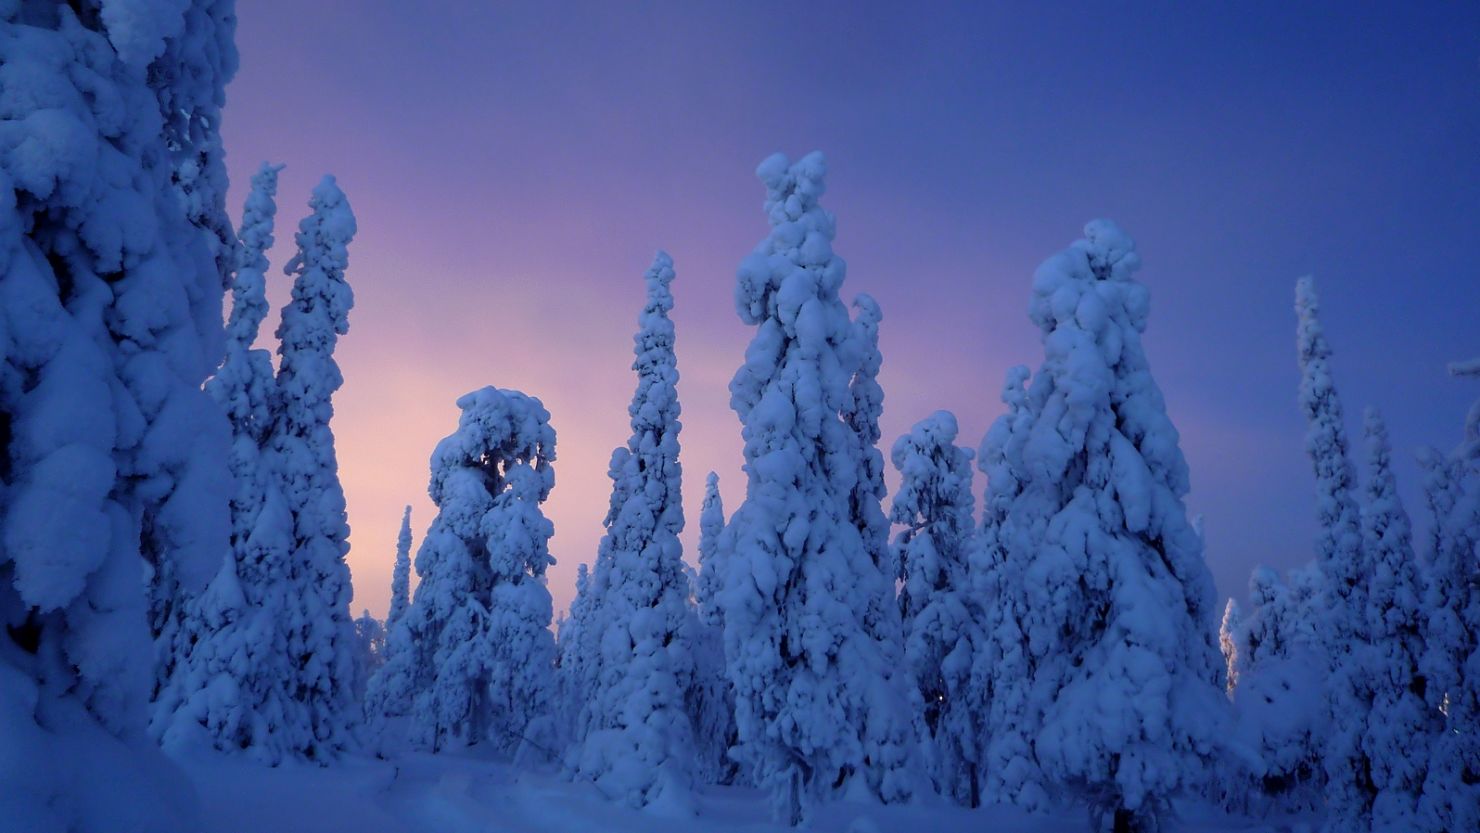 Explore the stunning scenery of Finnish Lapland.